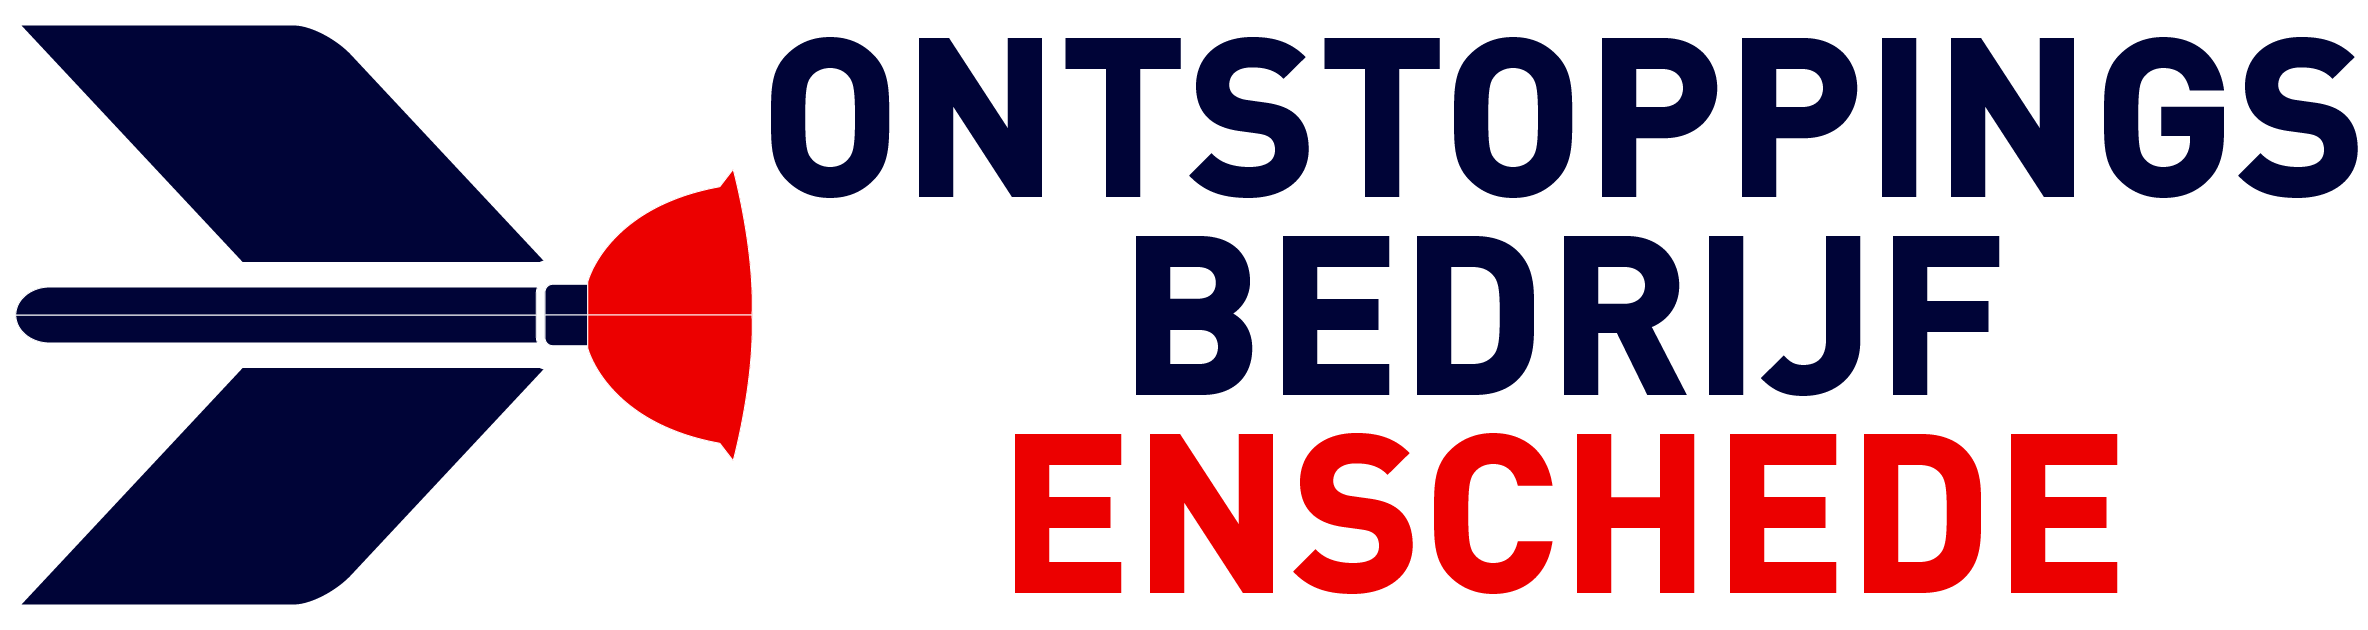 Ontstoppingsbedrijf Enschede logo